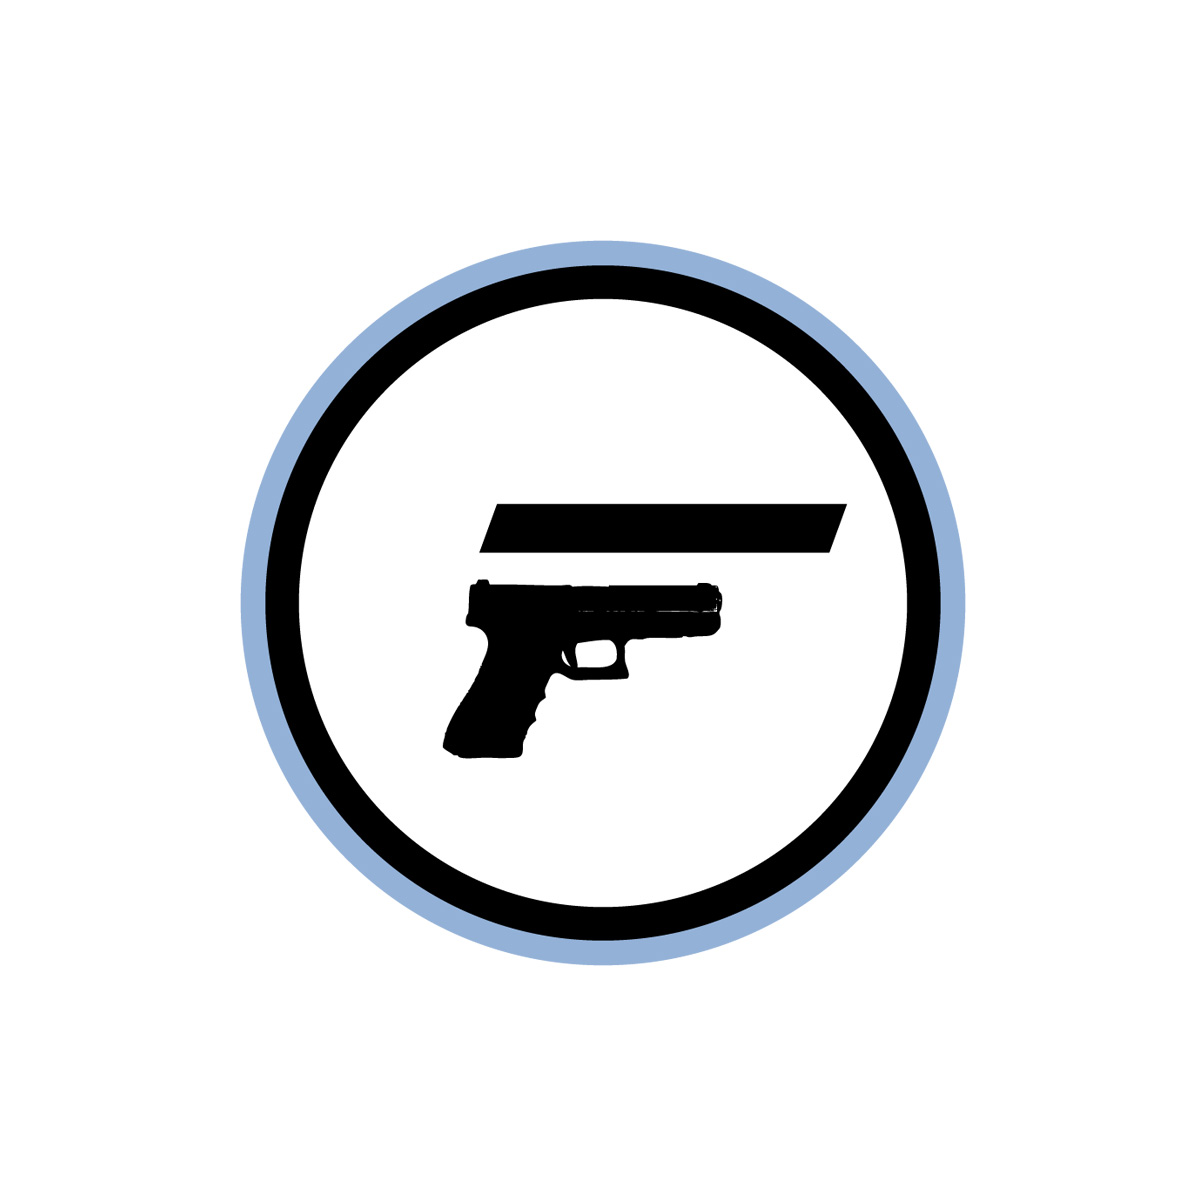 Firearm Insurance Services typographic logo